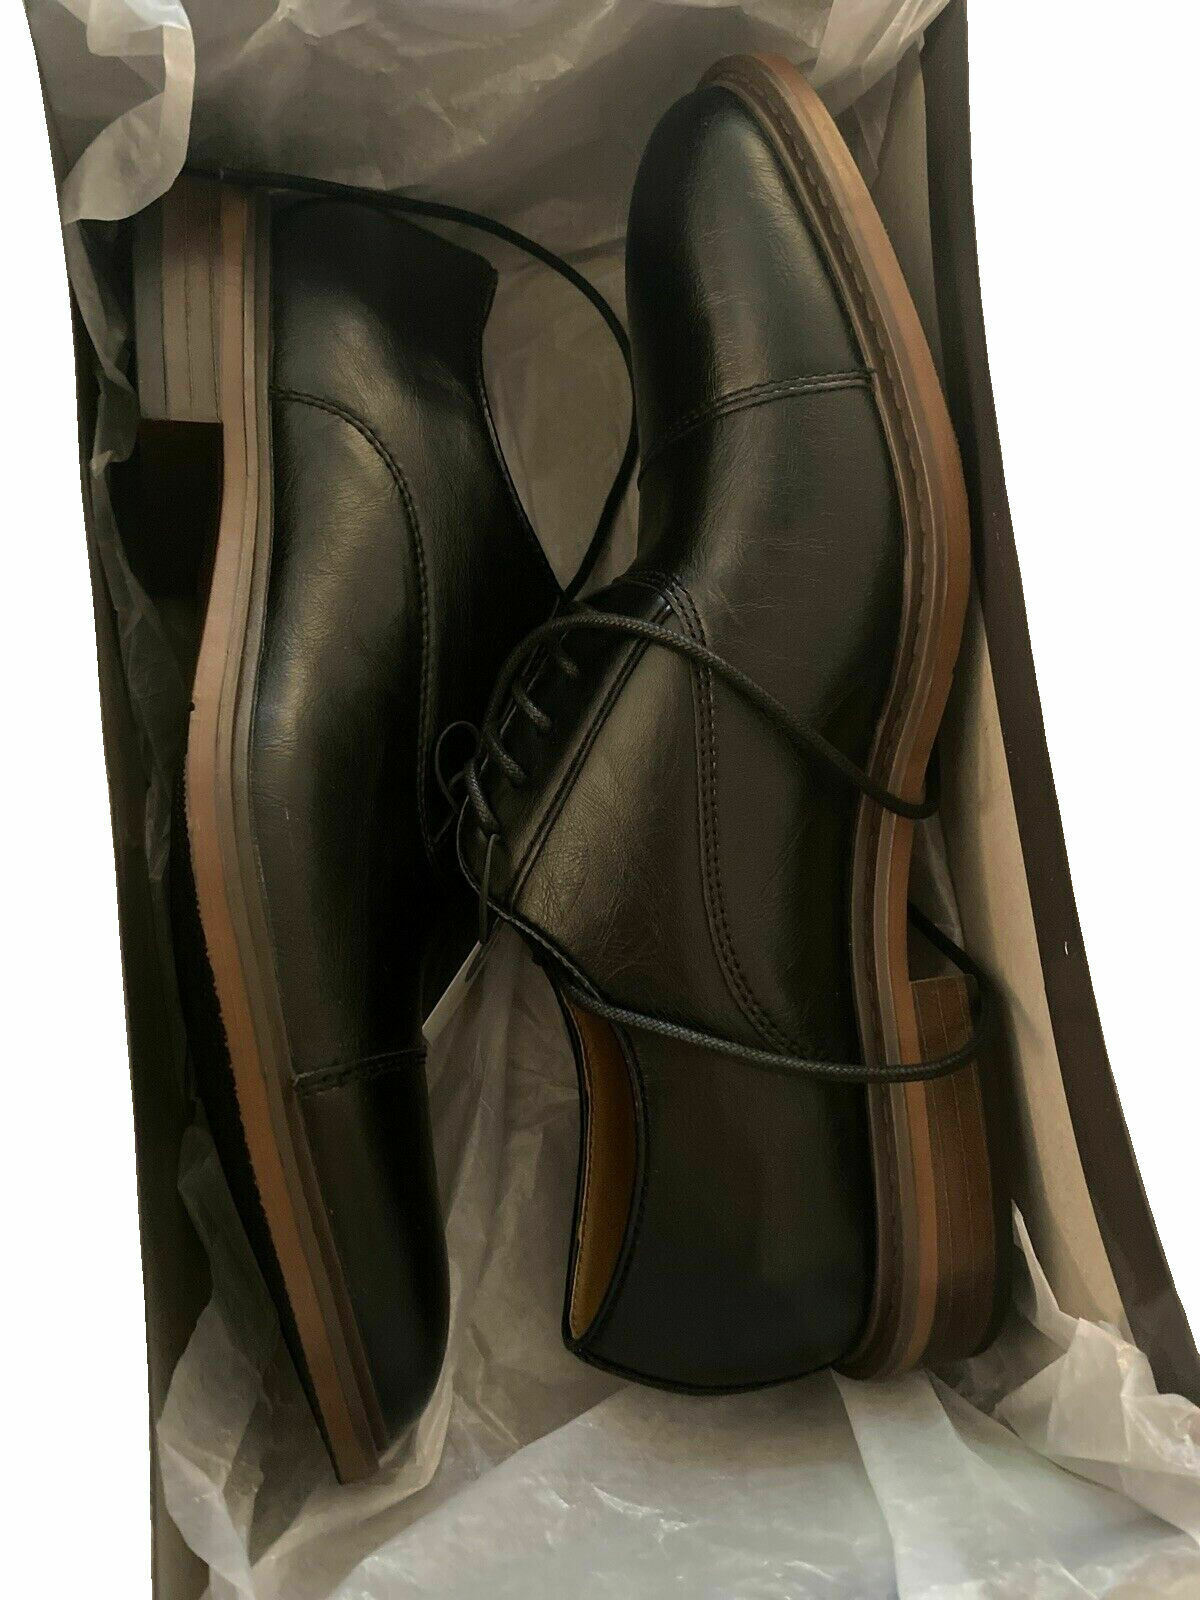 Goodfellow & Co Joseph Captoe Oxford Dress Shoes Black US Size 8 Mens NWT in Box